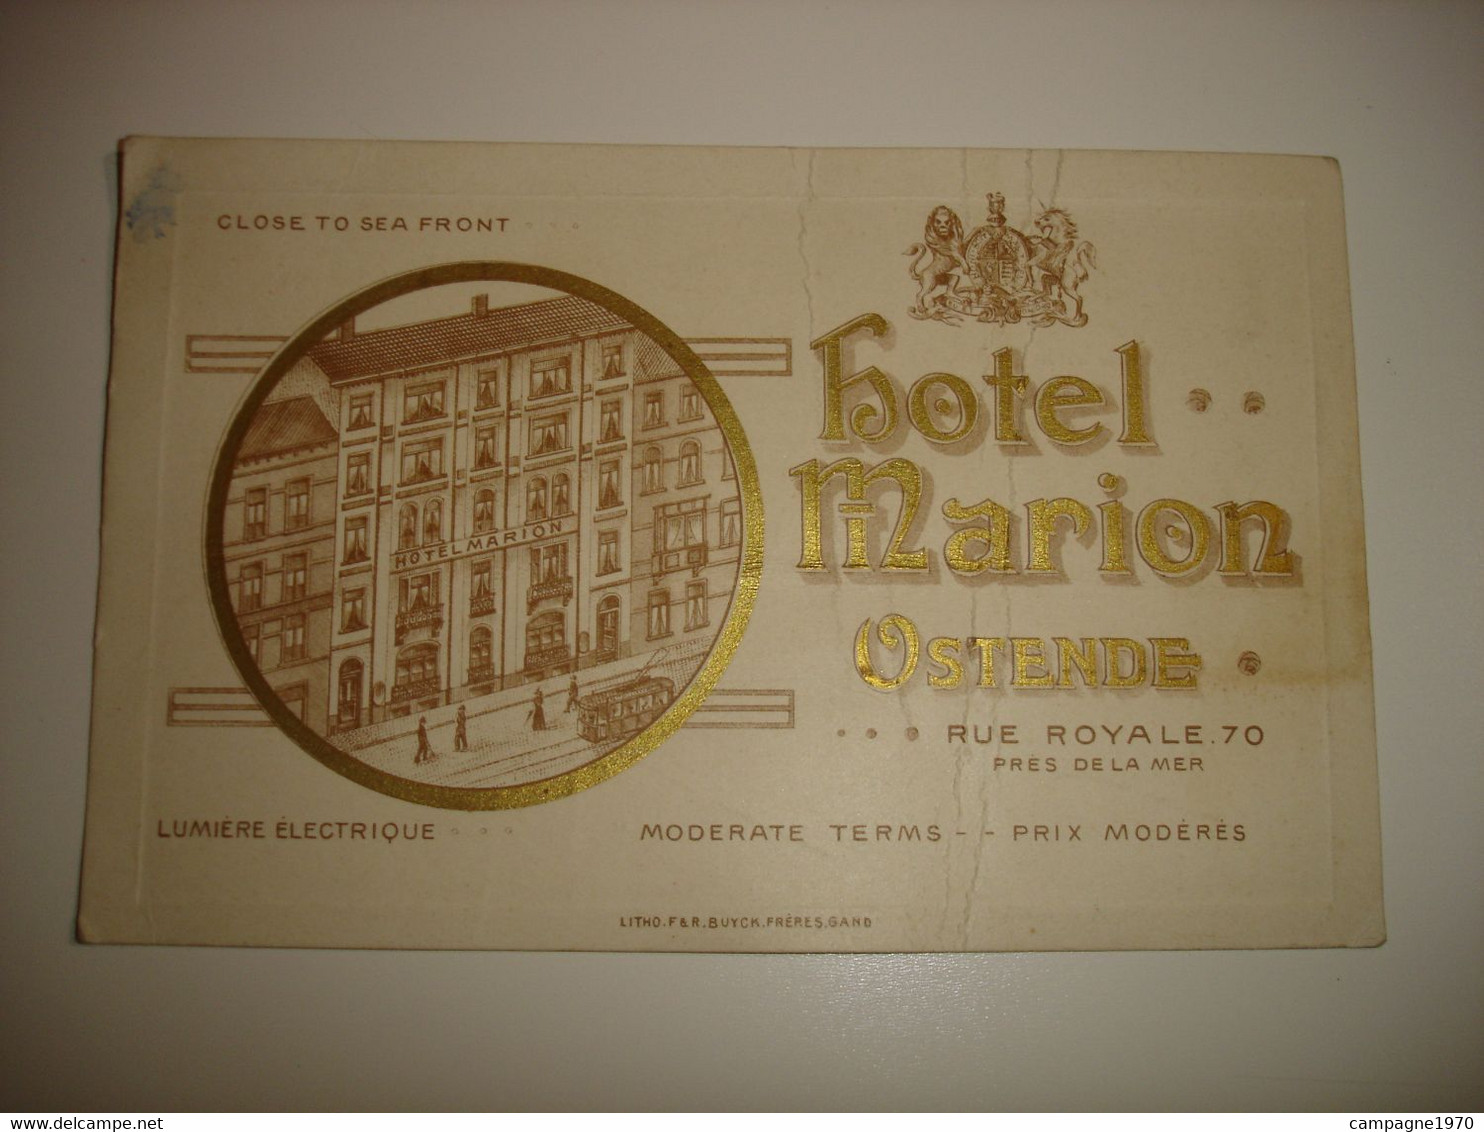 ZELDZAAM !! PUB FORMAT CPA - OOSTENDE OSTENDE - HOTEL MARION ( PROPRIETAIRE DEUTS HARLING ) ( !! ZIE STAAT !! ) - Oostende